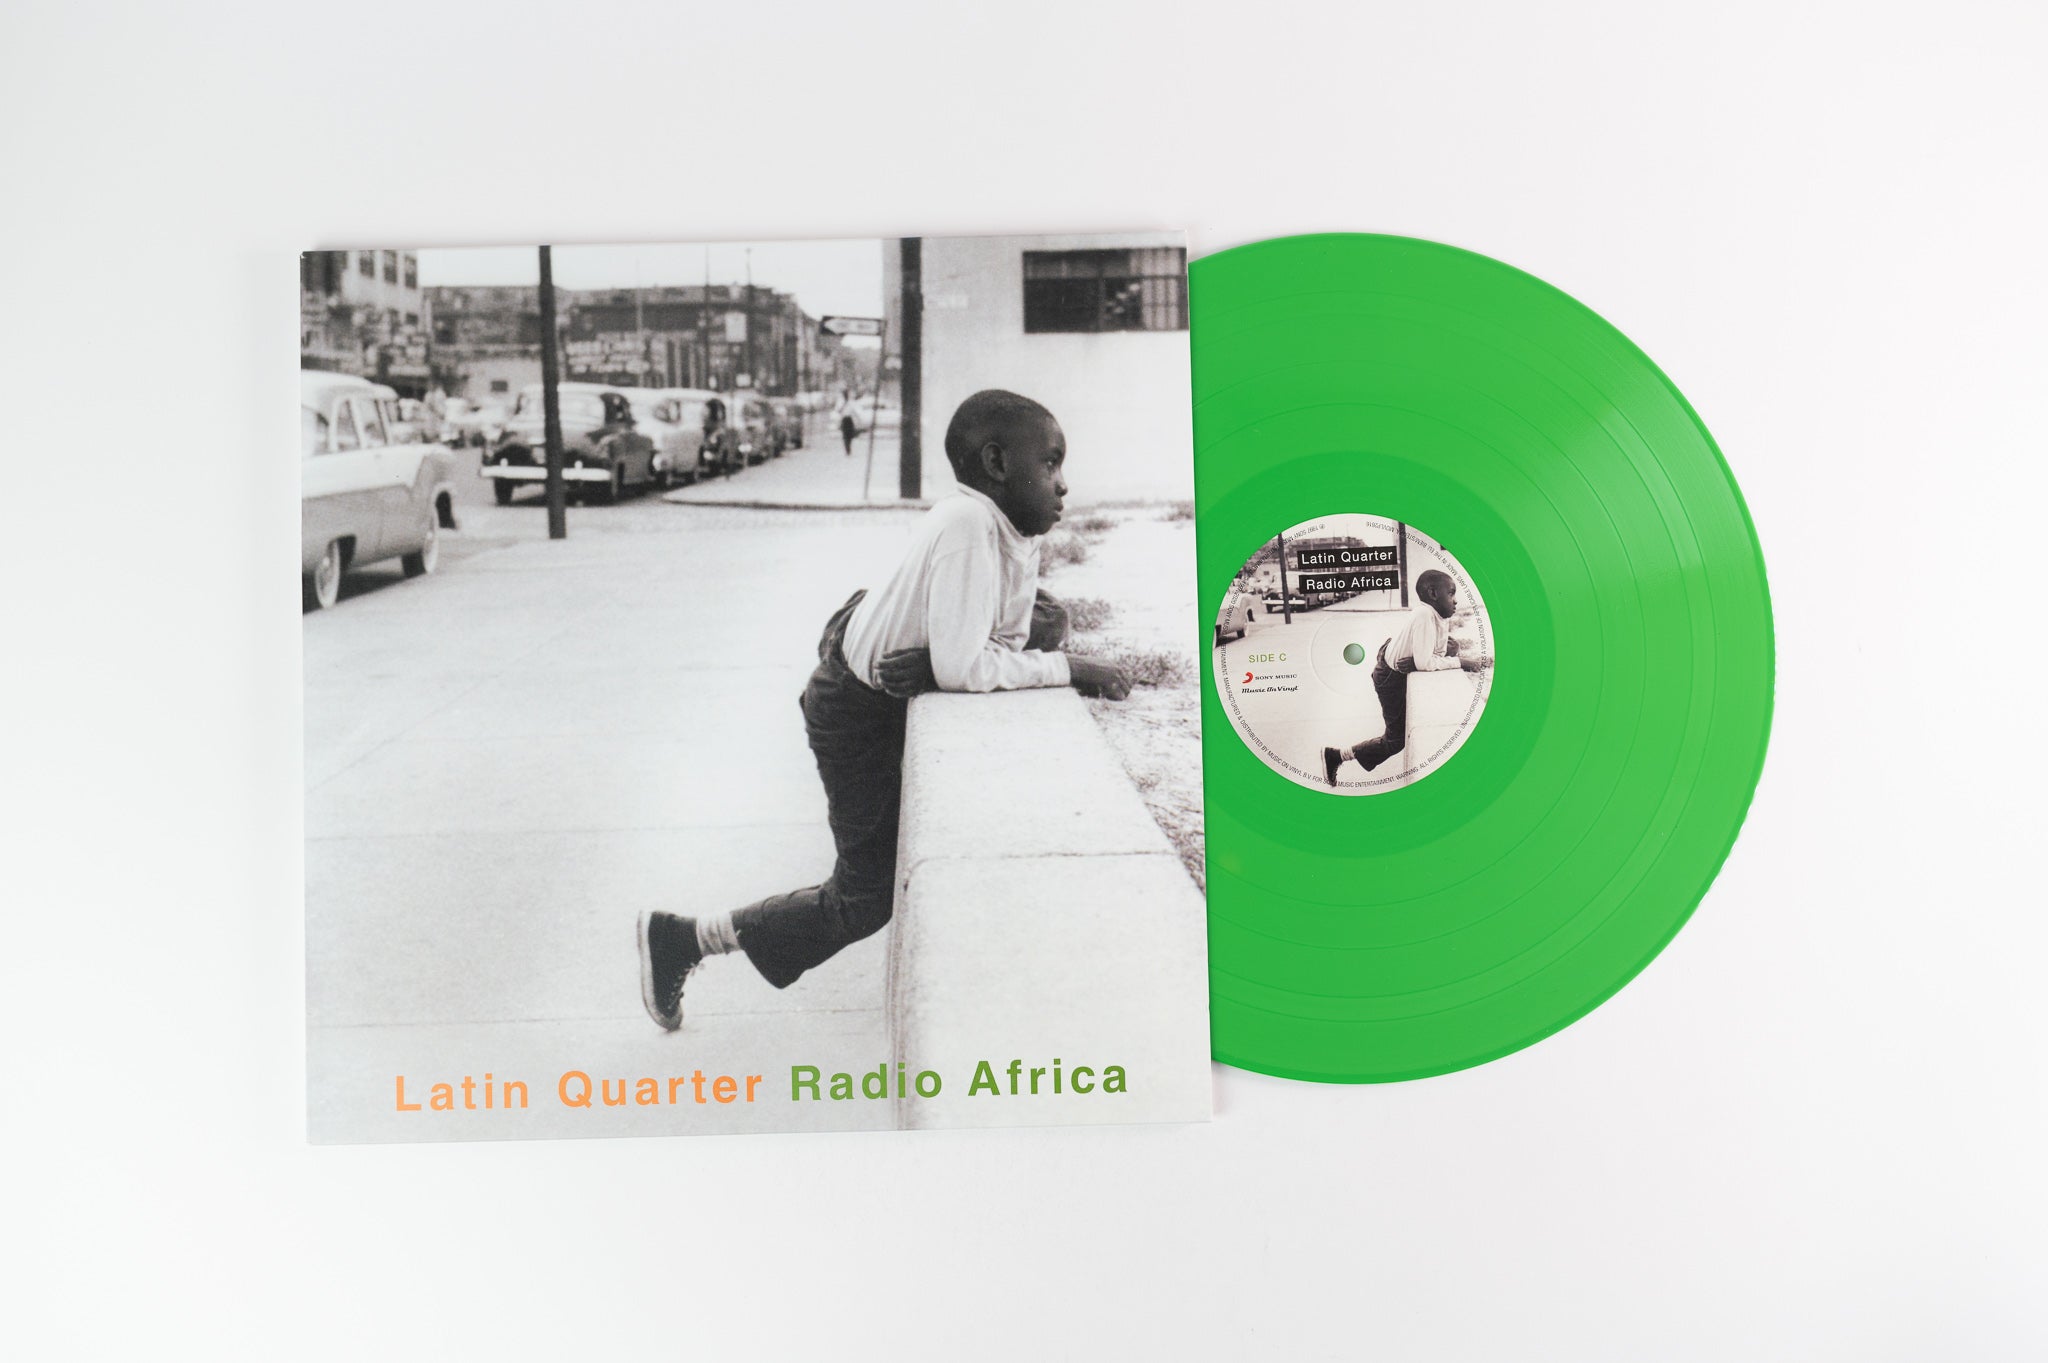 Latin Quarter - Radio Africa on Music On Vinyl - Orange & Green Vinyl